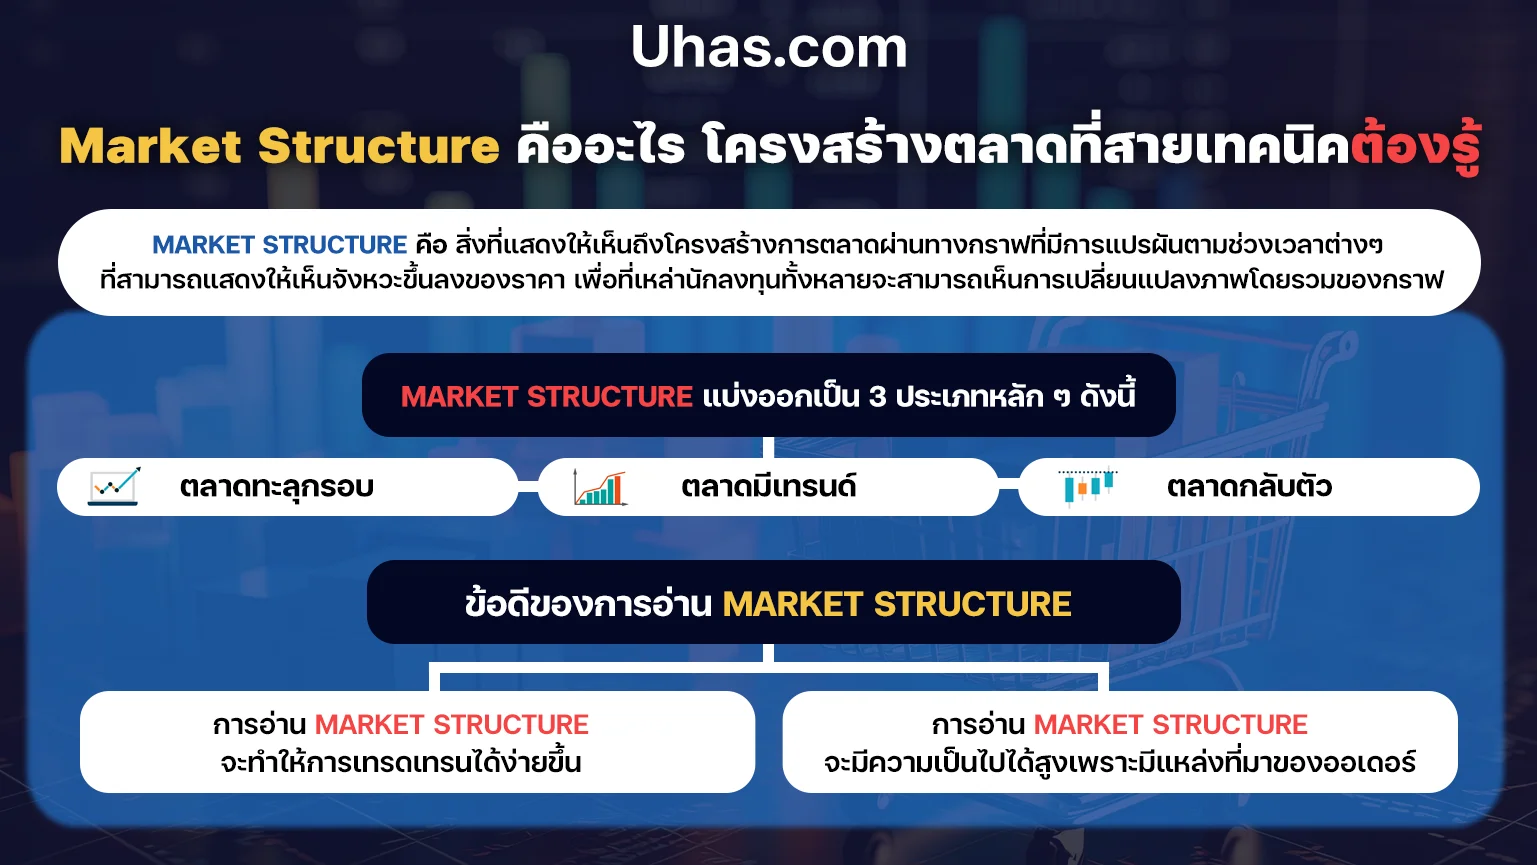 Market Structure มีกี่ประเภท